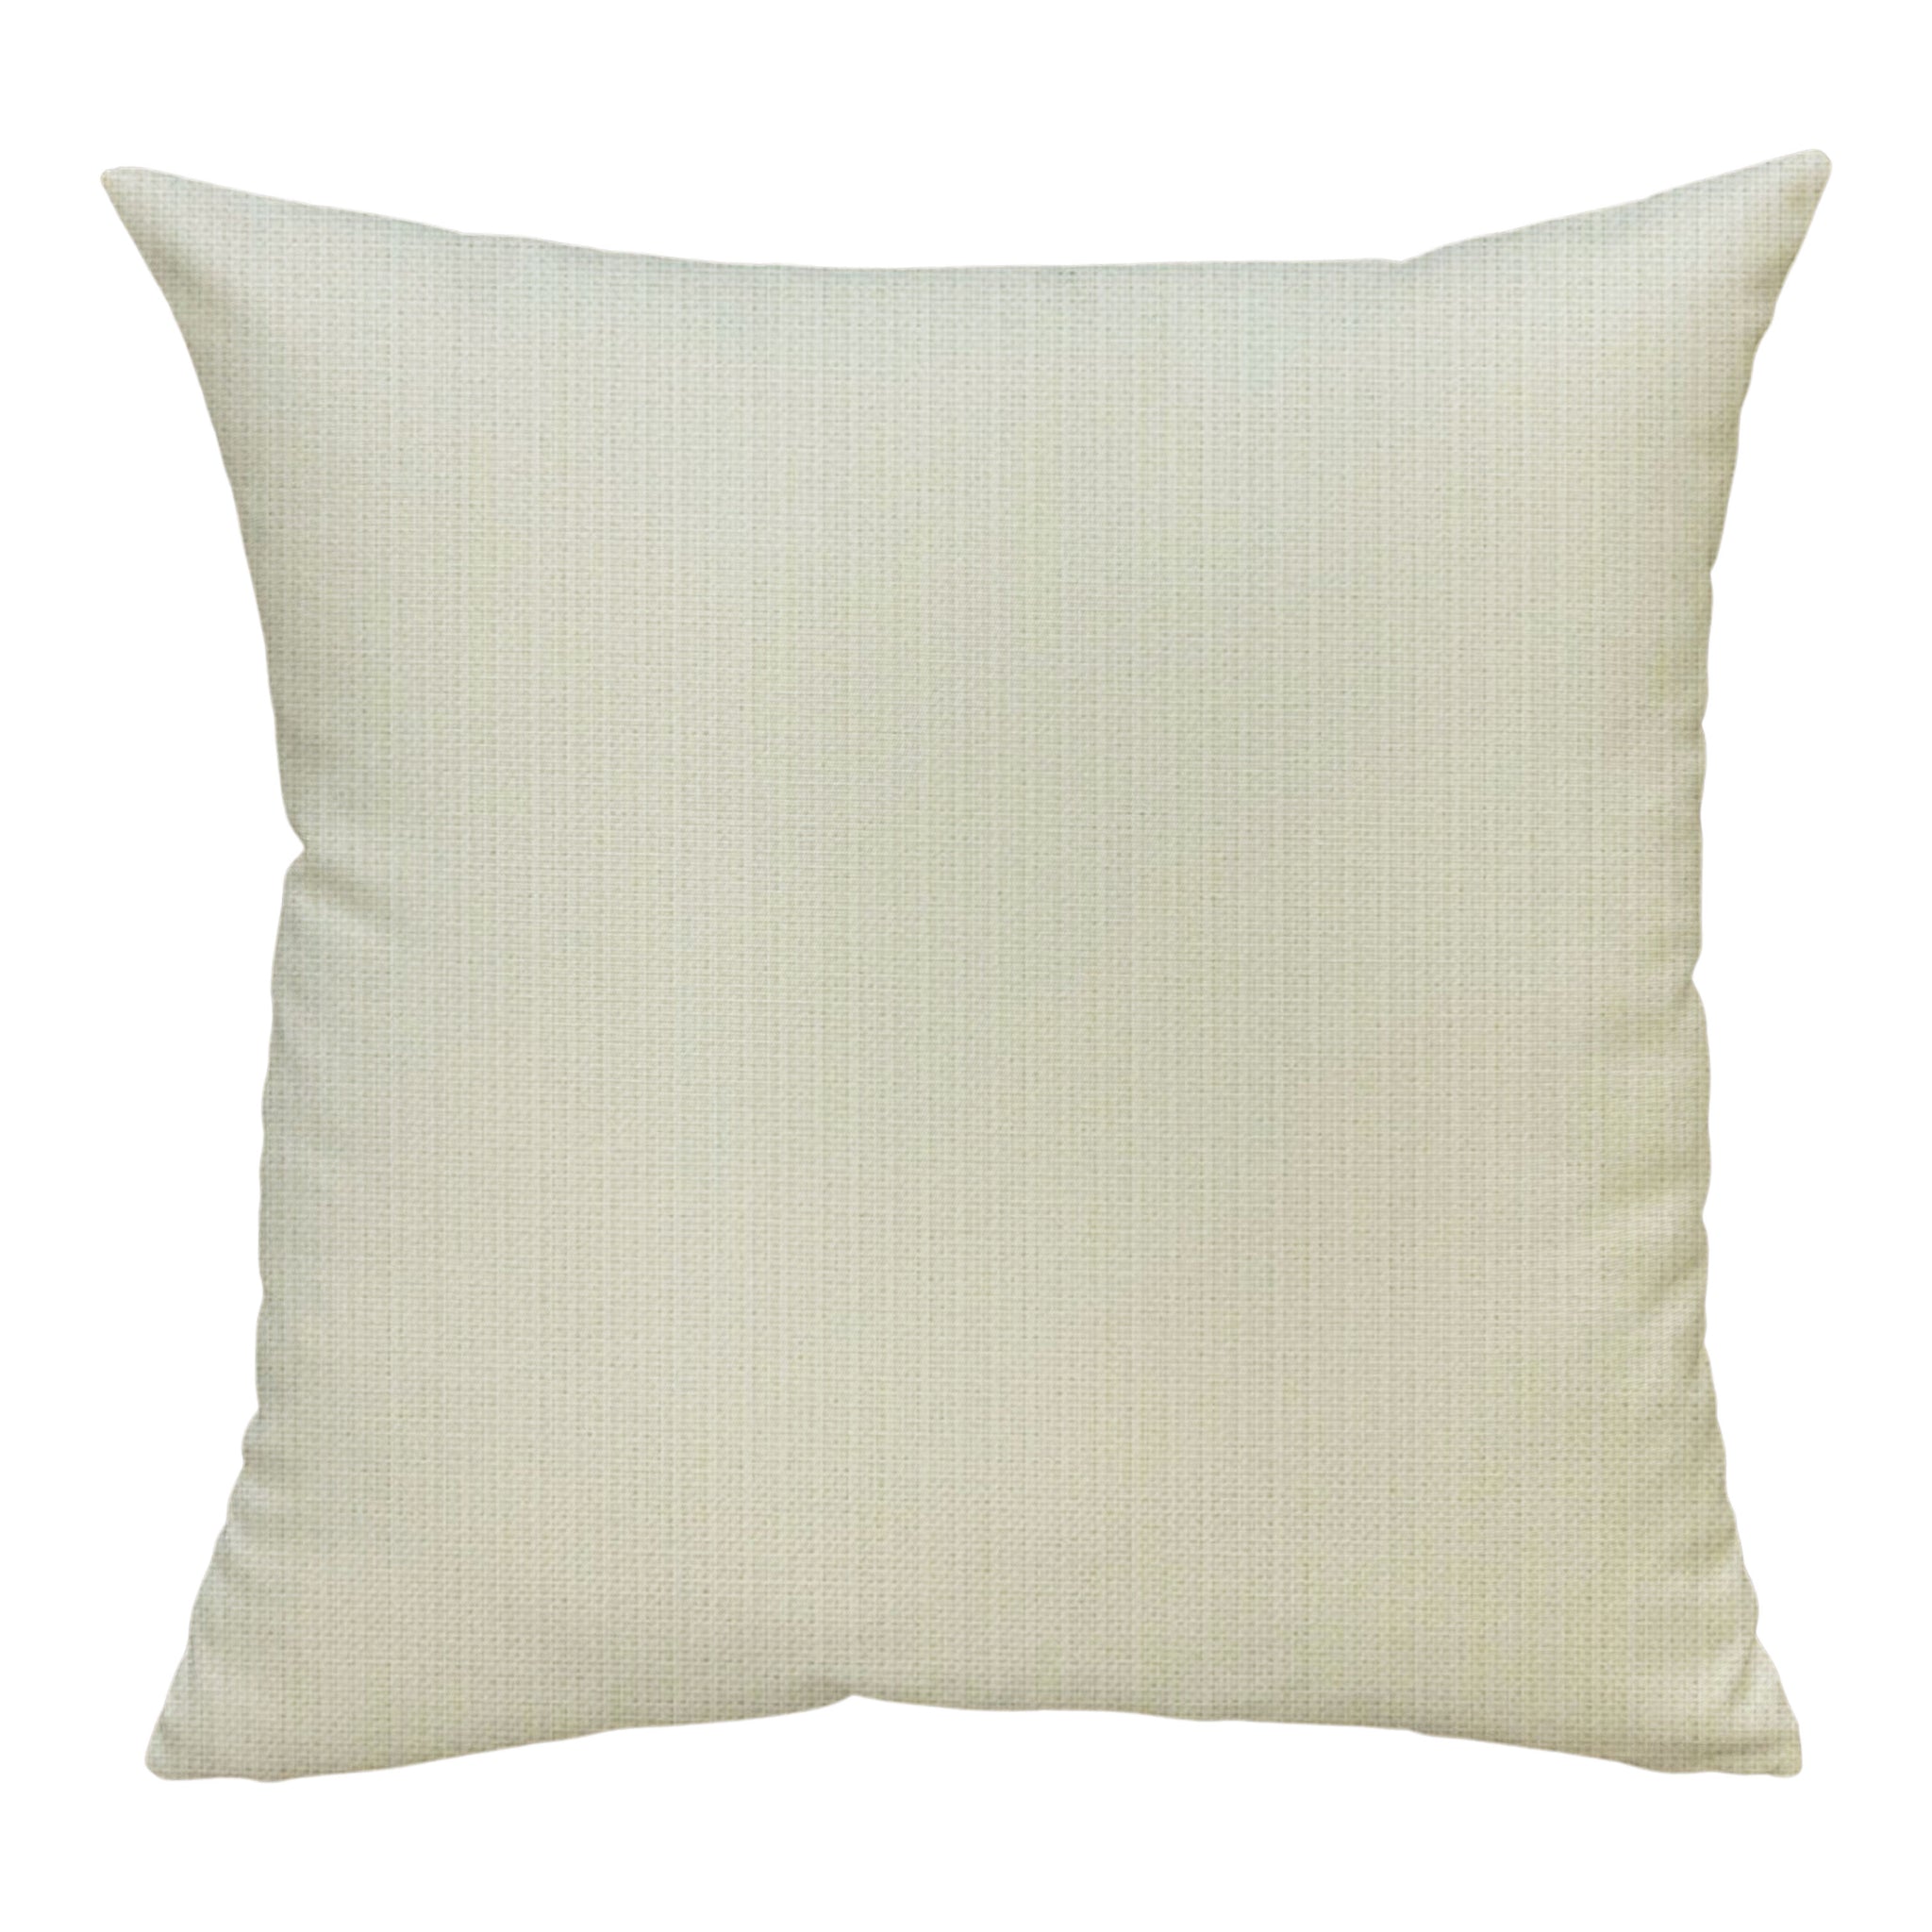 Sunbrella® Spectrum Pillow Cover in Eggshell